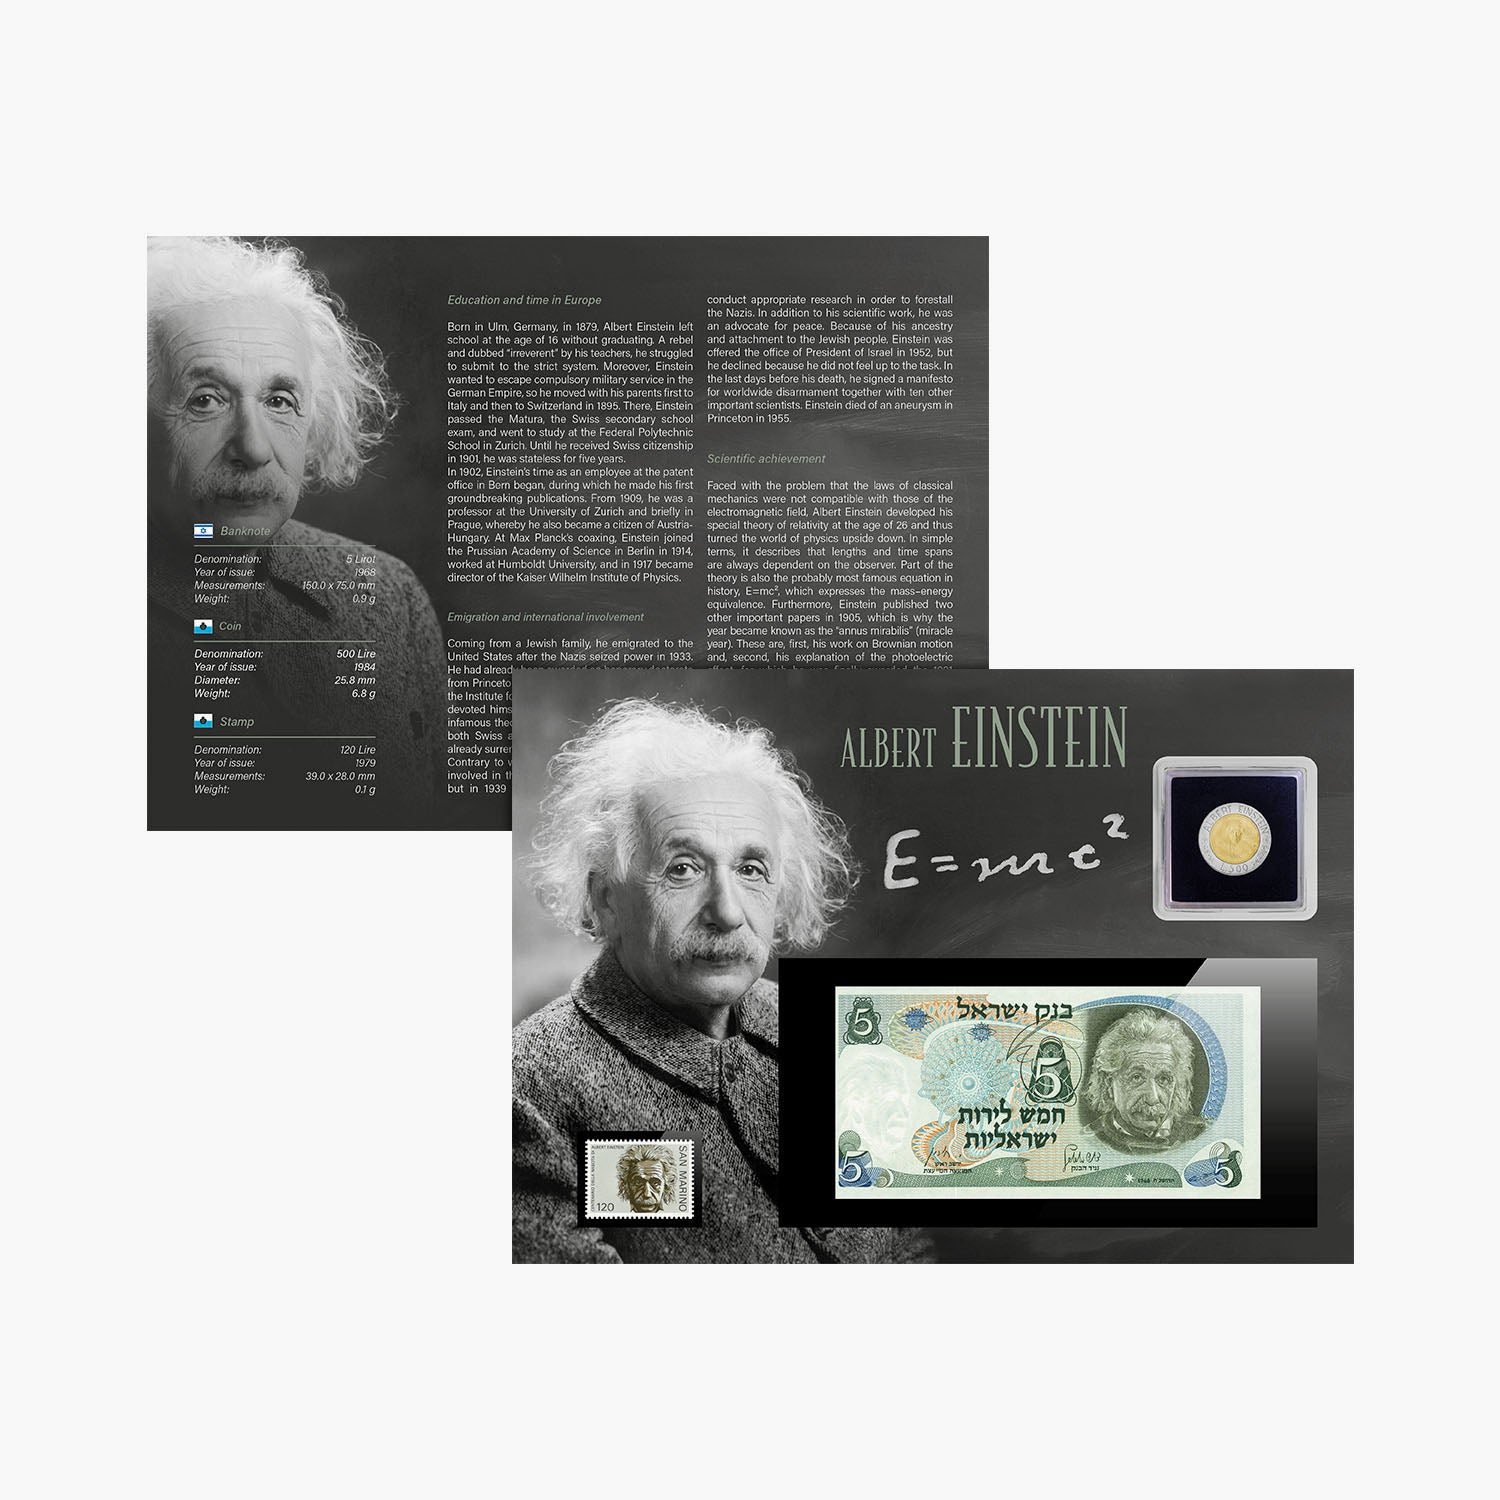 Albert Einstein coin, banknote and stamp collection